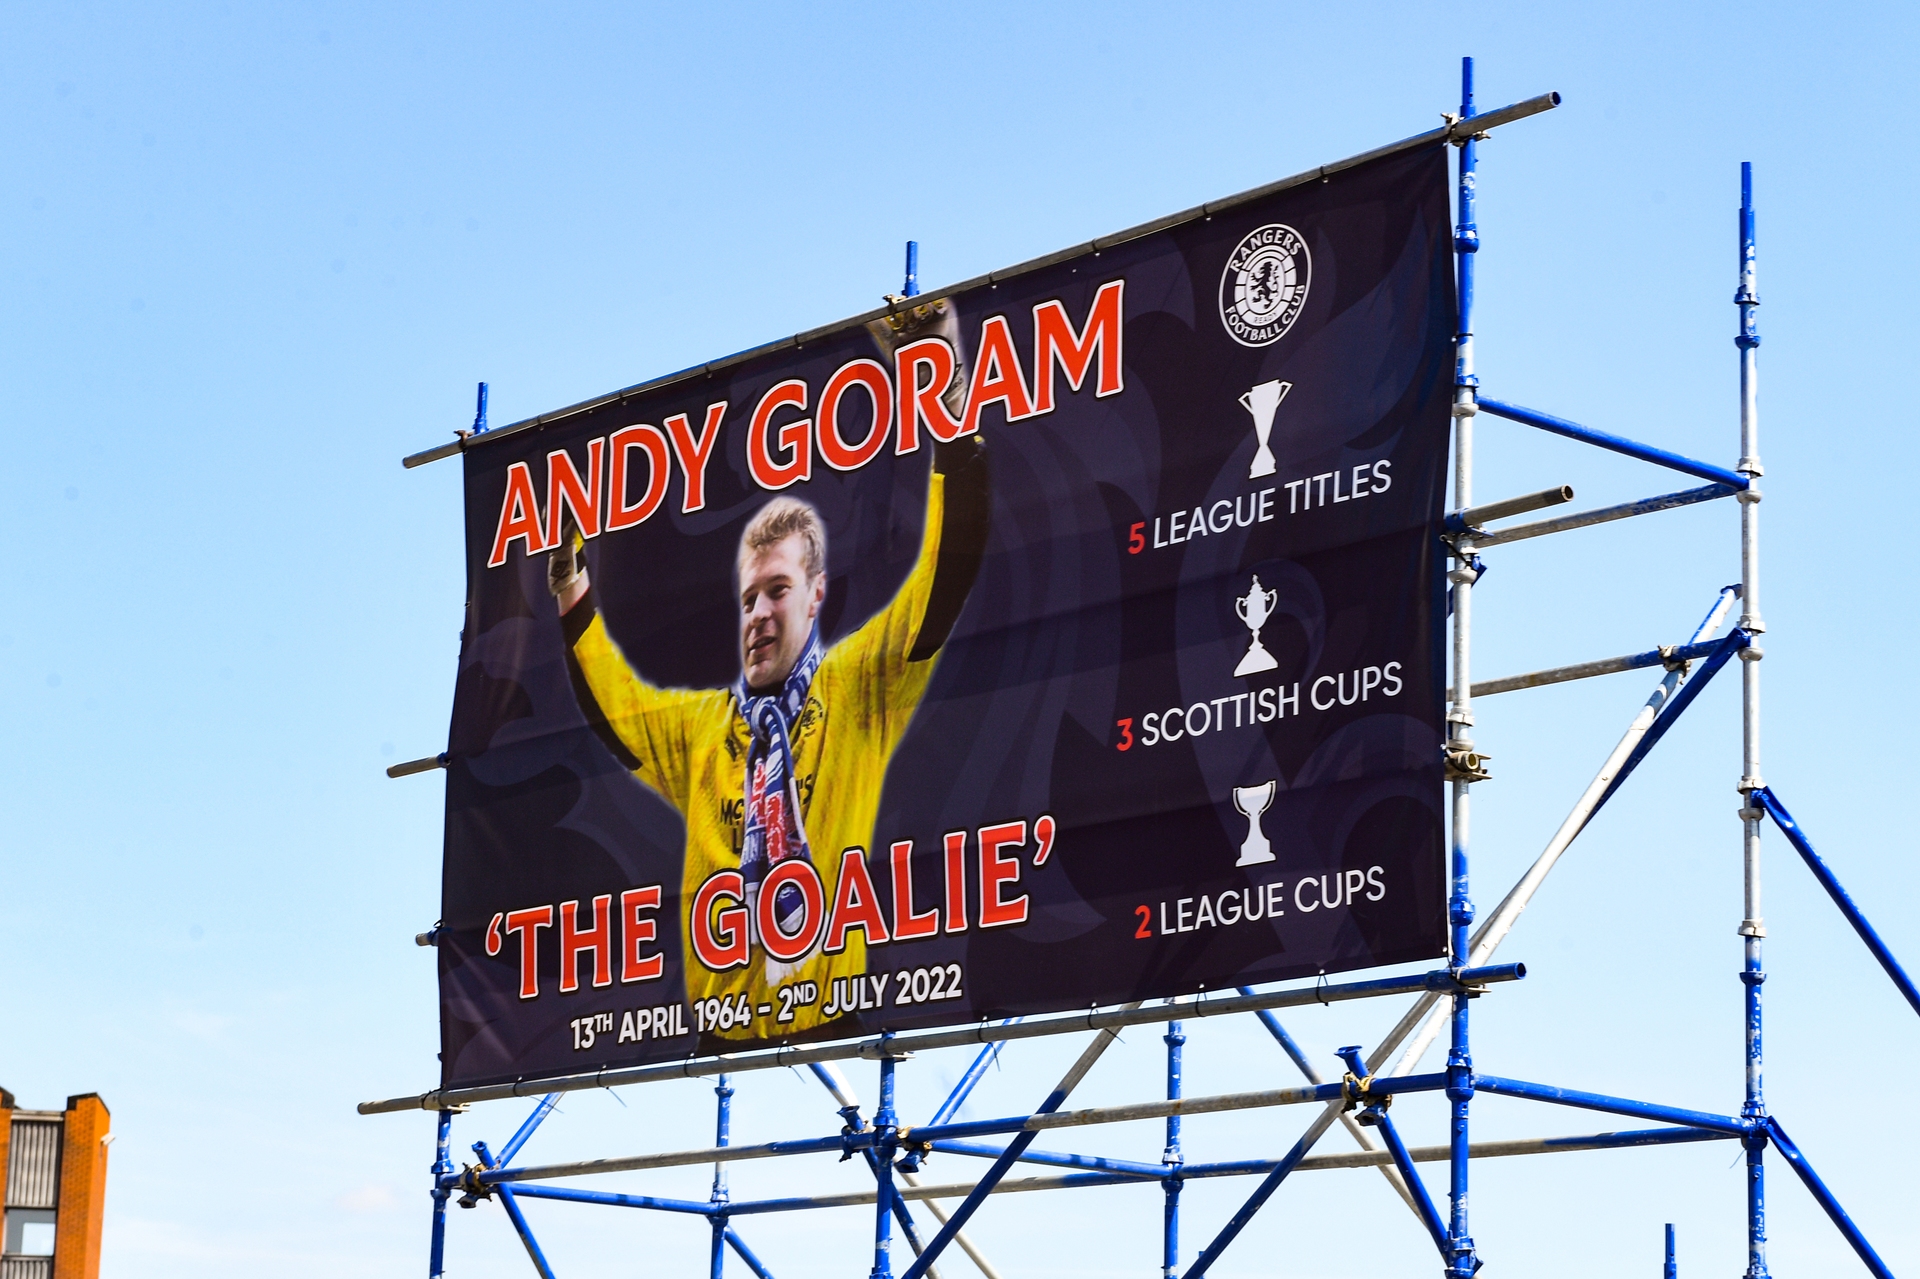 Goram was nicknamed 'The Goalie'.